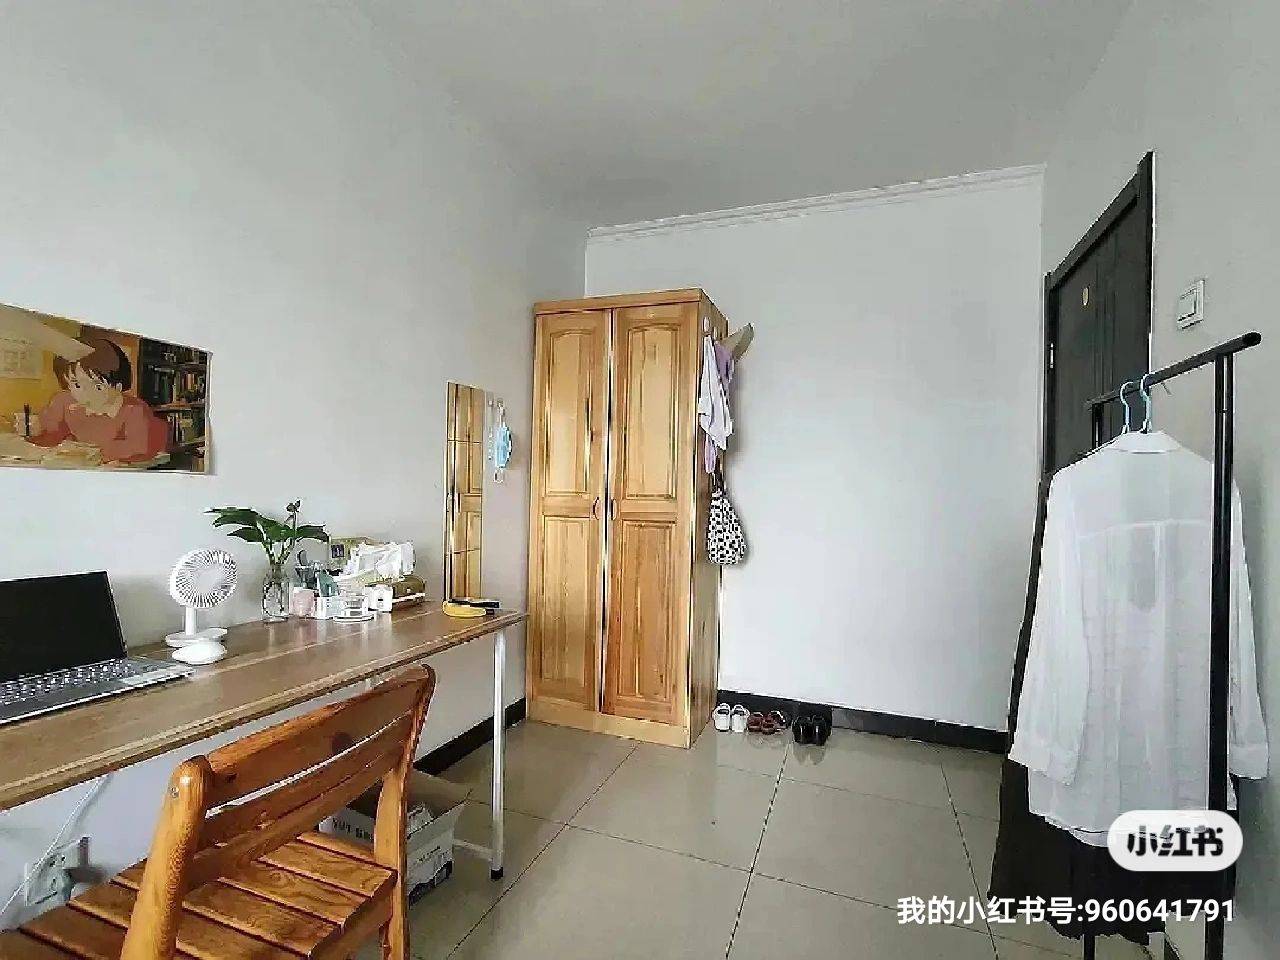 Beijing-Haidian-Cozy Home,Clean&Comfy,No Gender Limit,Hustle & Bustle,LGBTQ Friendly